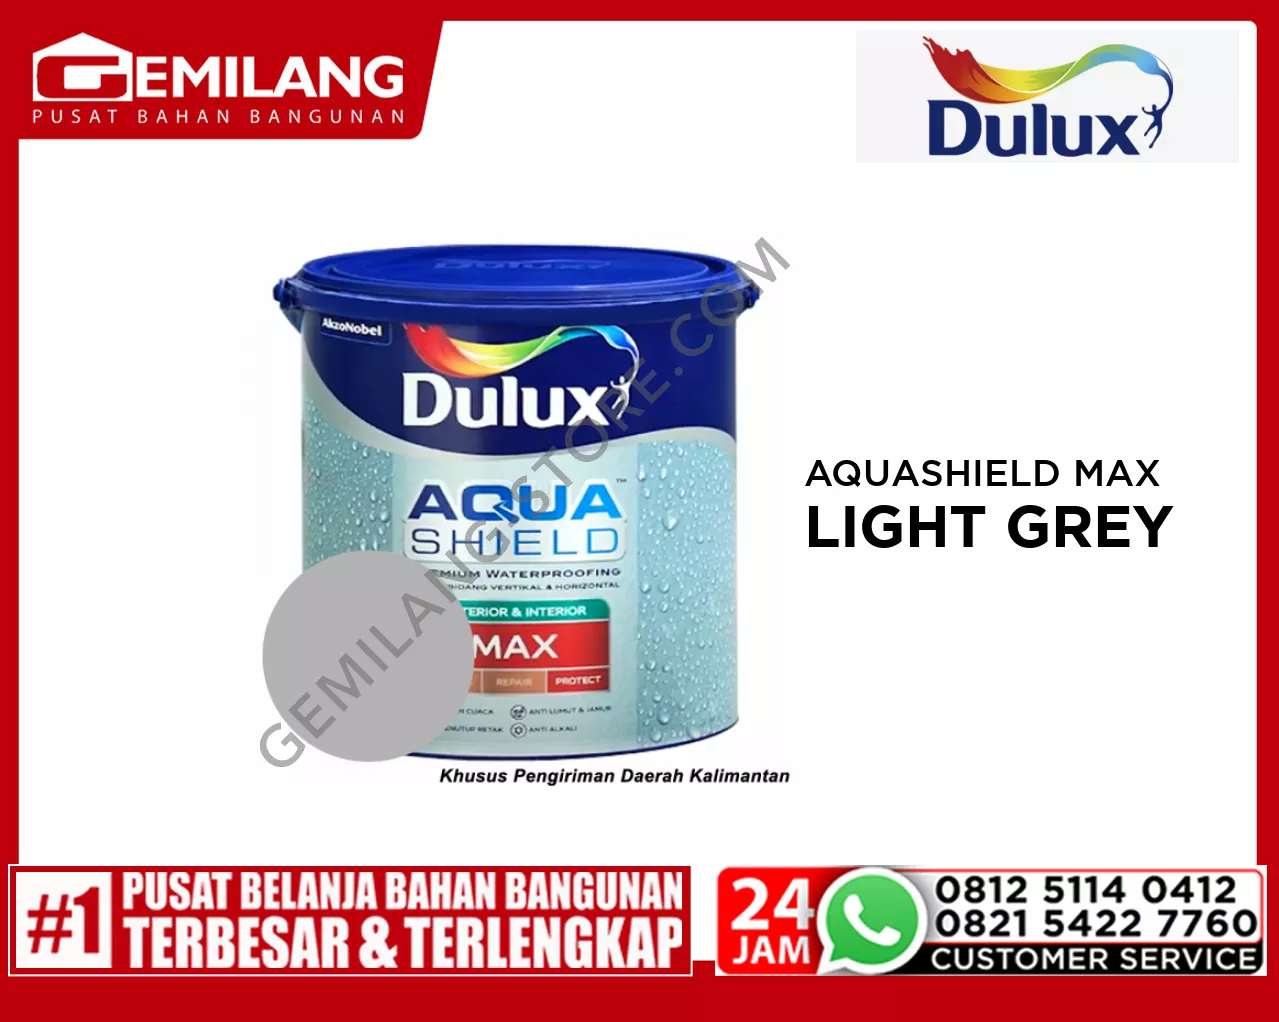 DULUX AQUASHIELD MAX LIGHT GREY 20kg